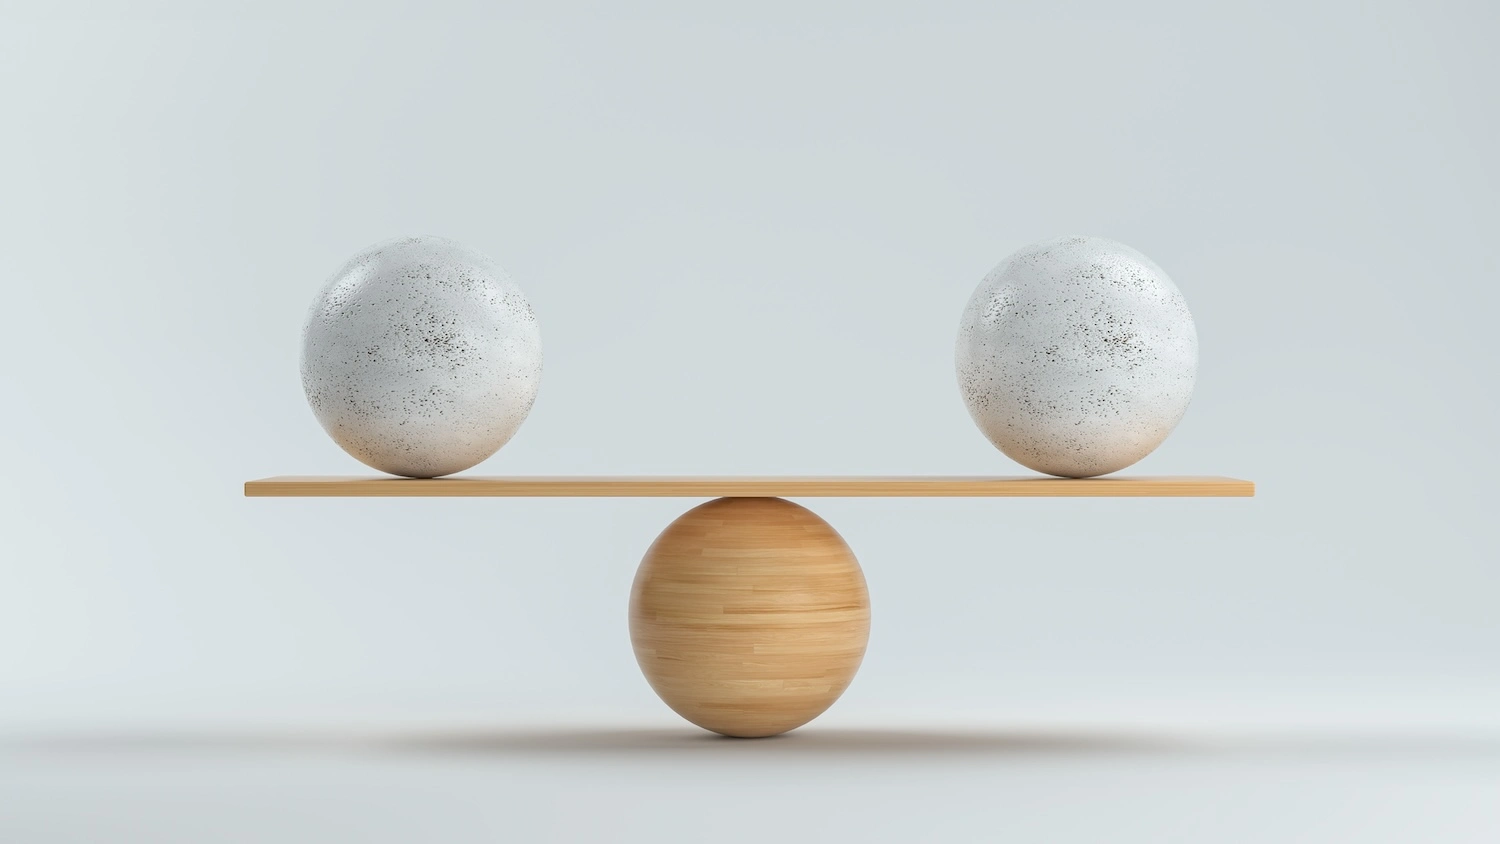 The Importance of Balance